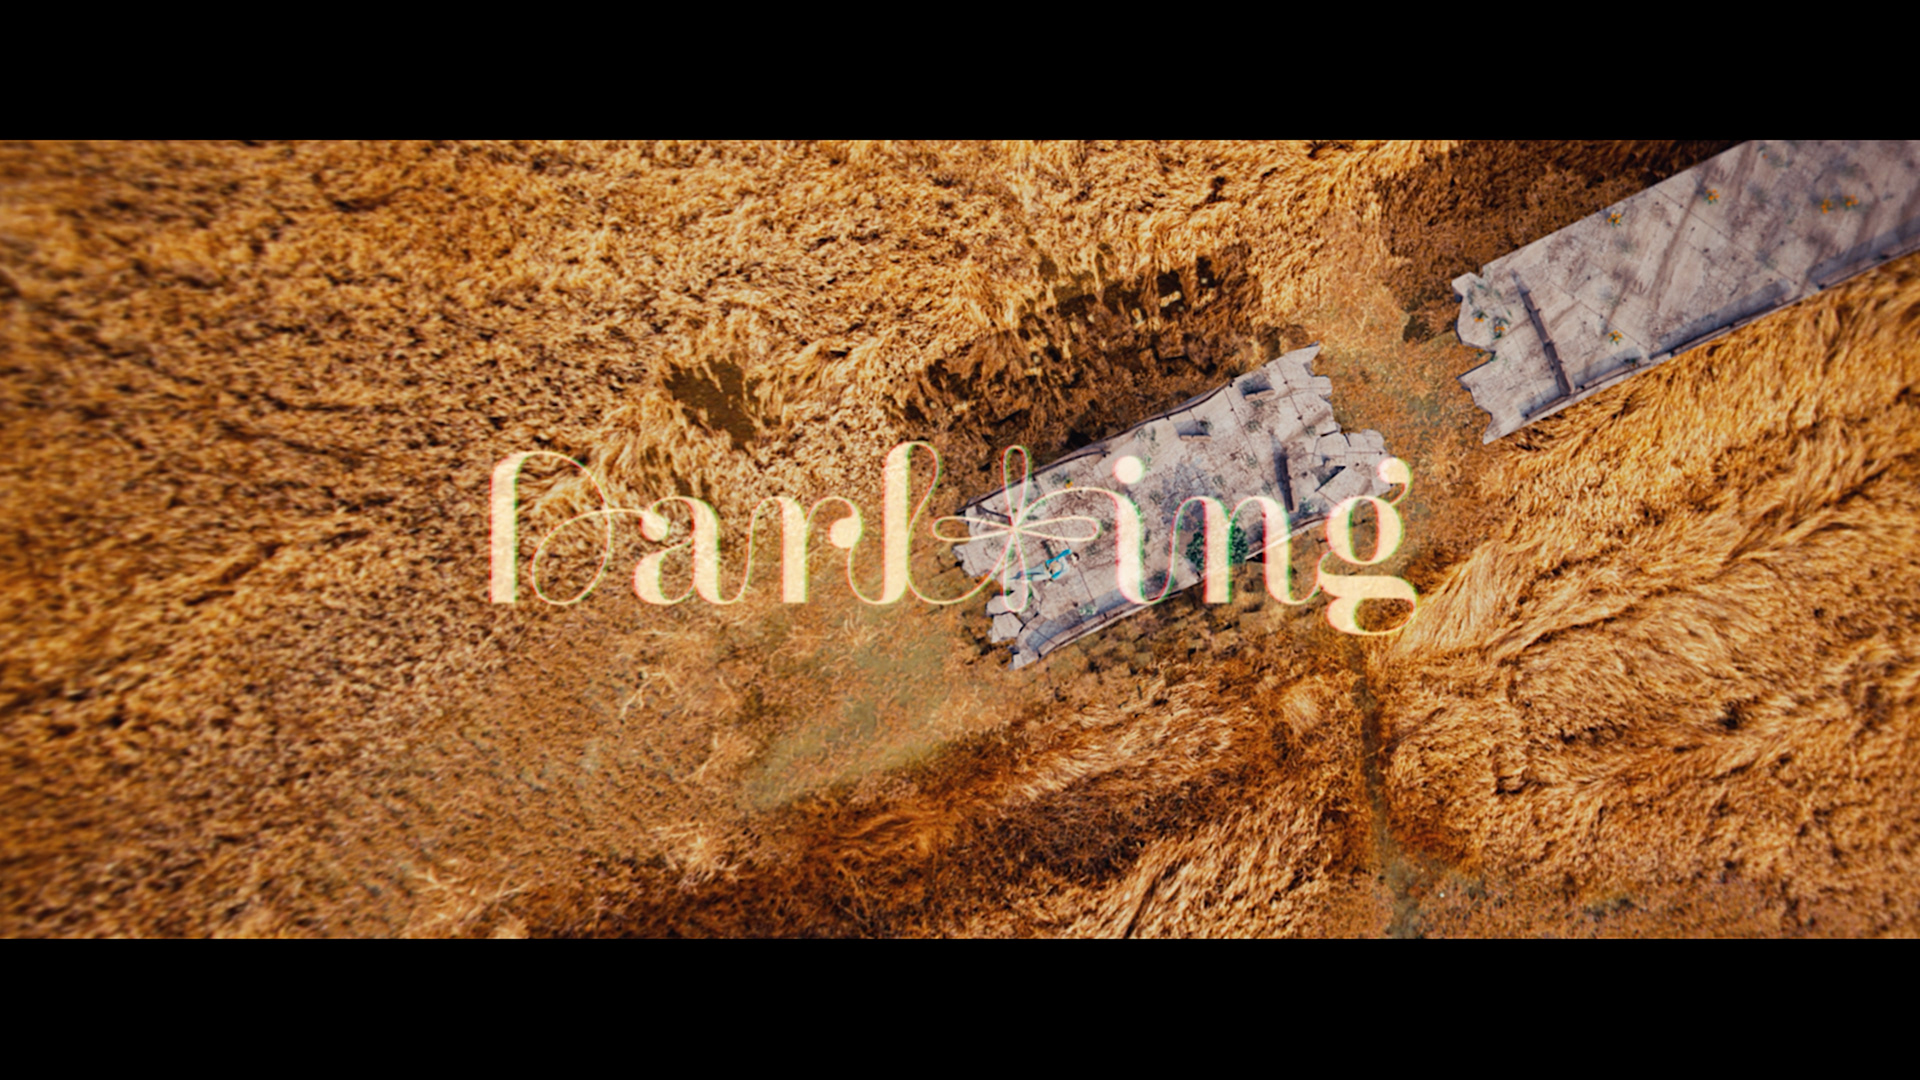 SEVENTEEN "DARL+ING" MV CG/VFX